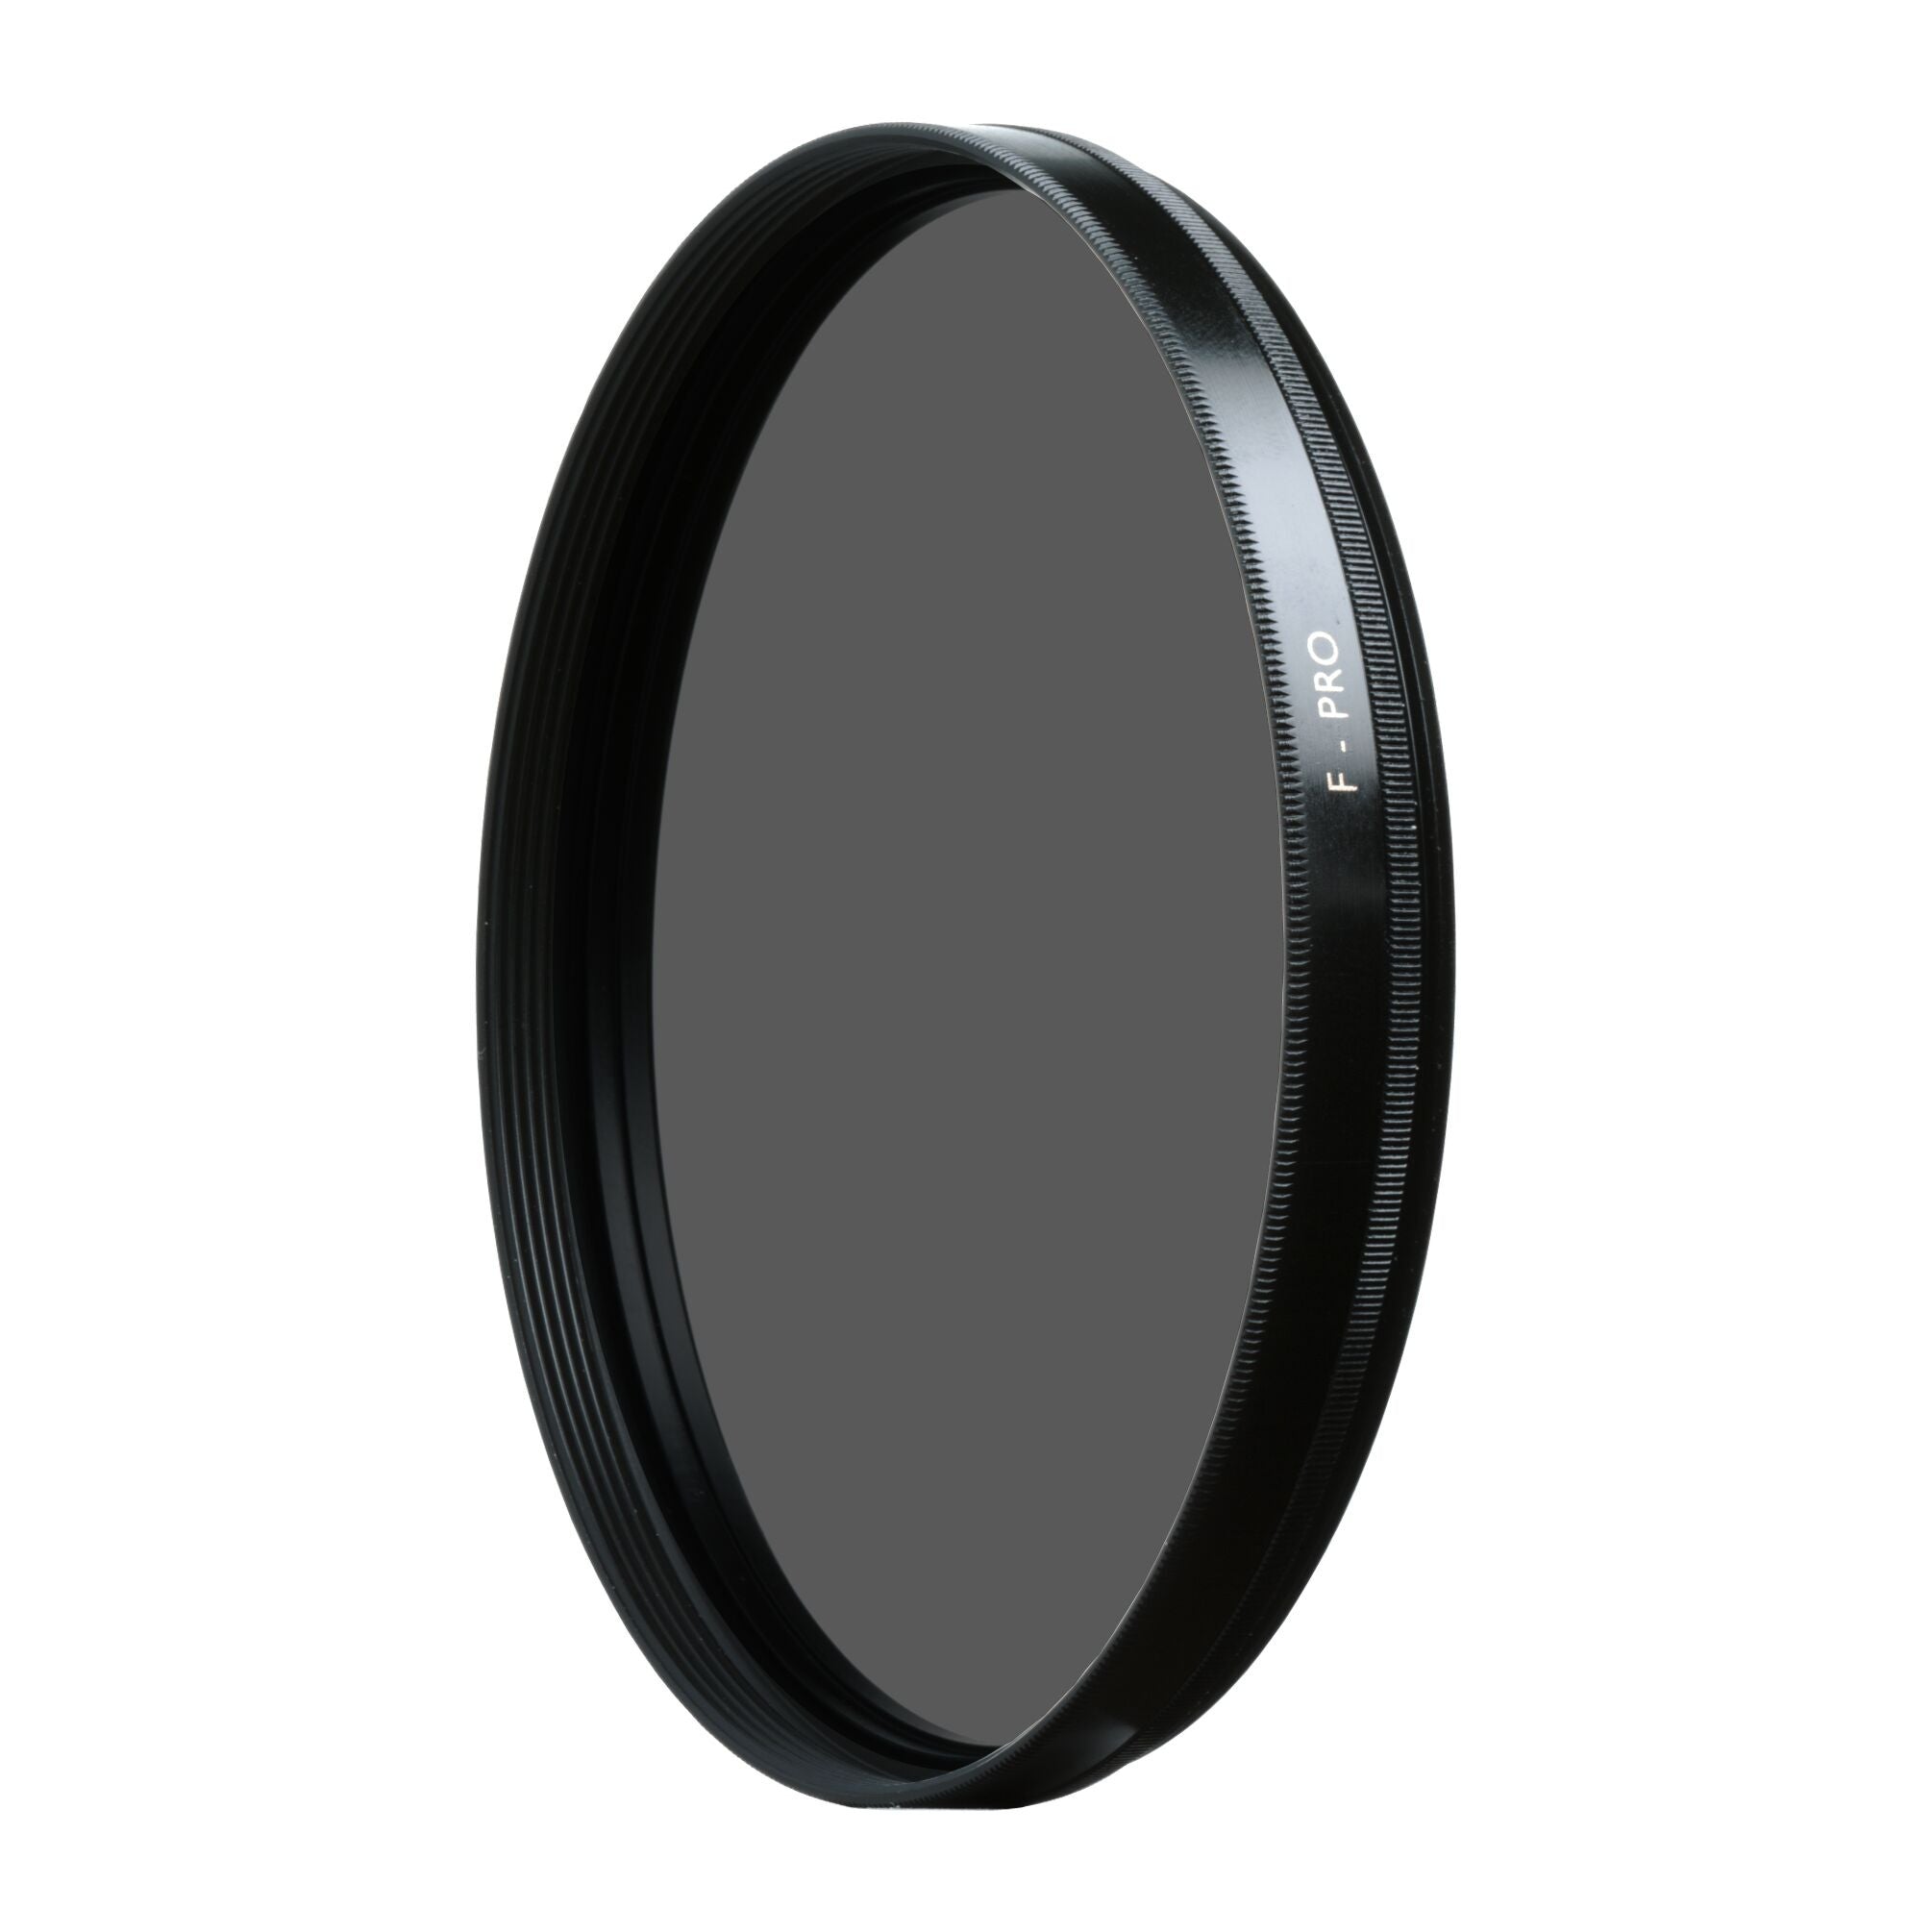 B+W 52mm Circular Polarizer Filter, lenses filters polarizer, B+W - Pictureline 